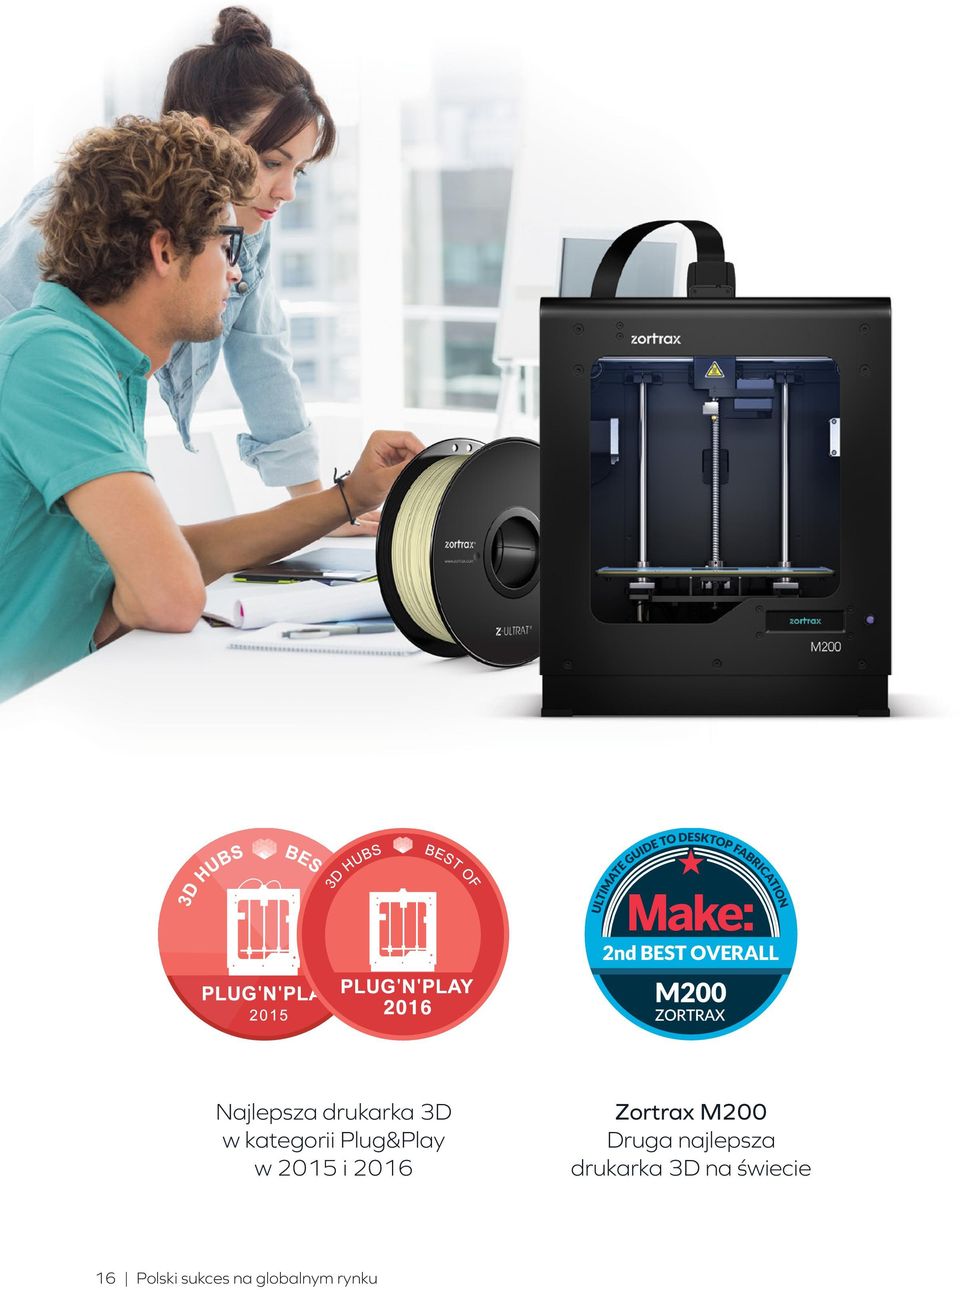 Druga najlepsza drukarka 3D na